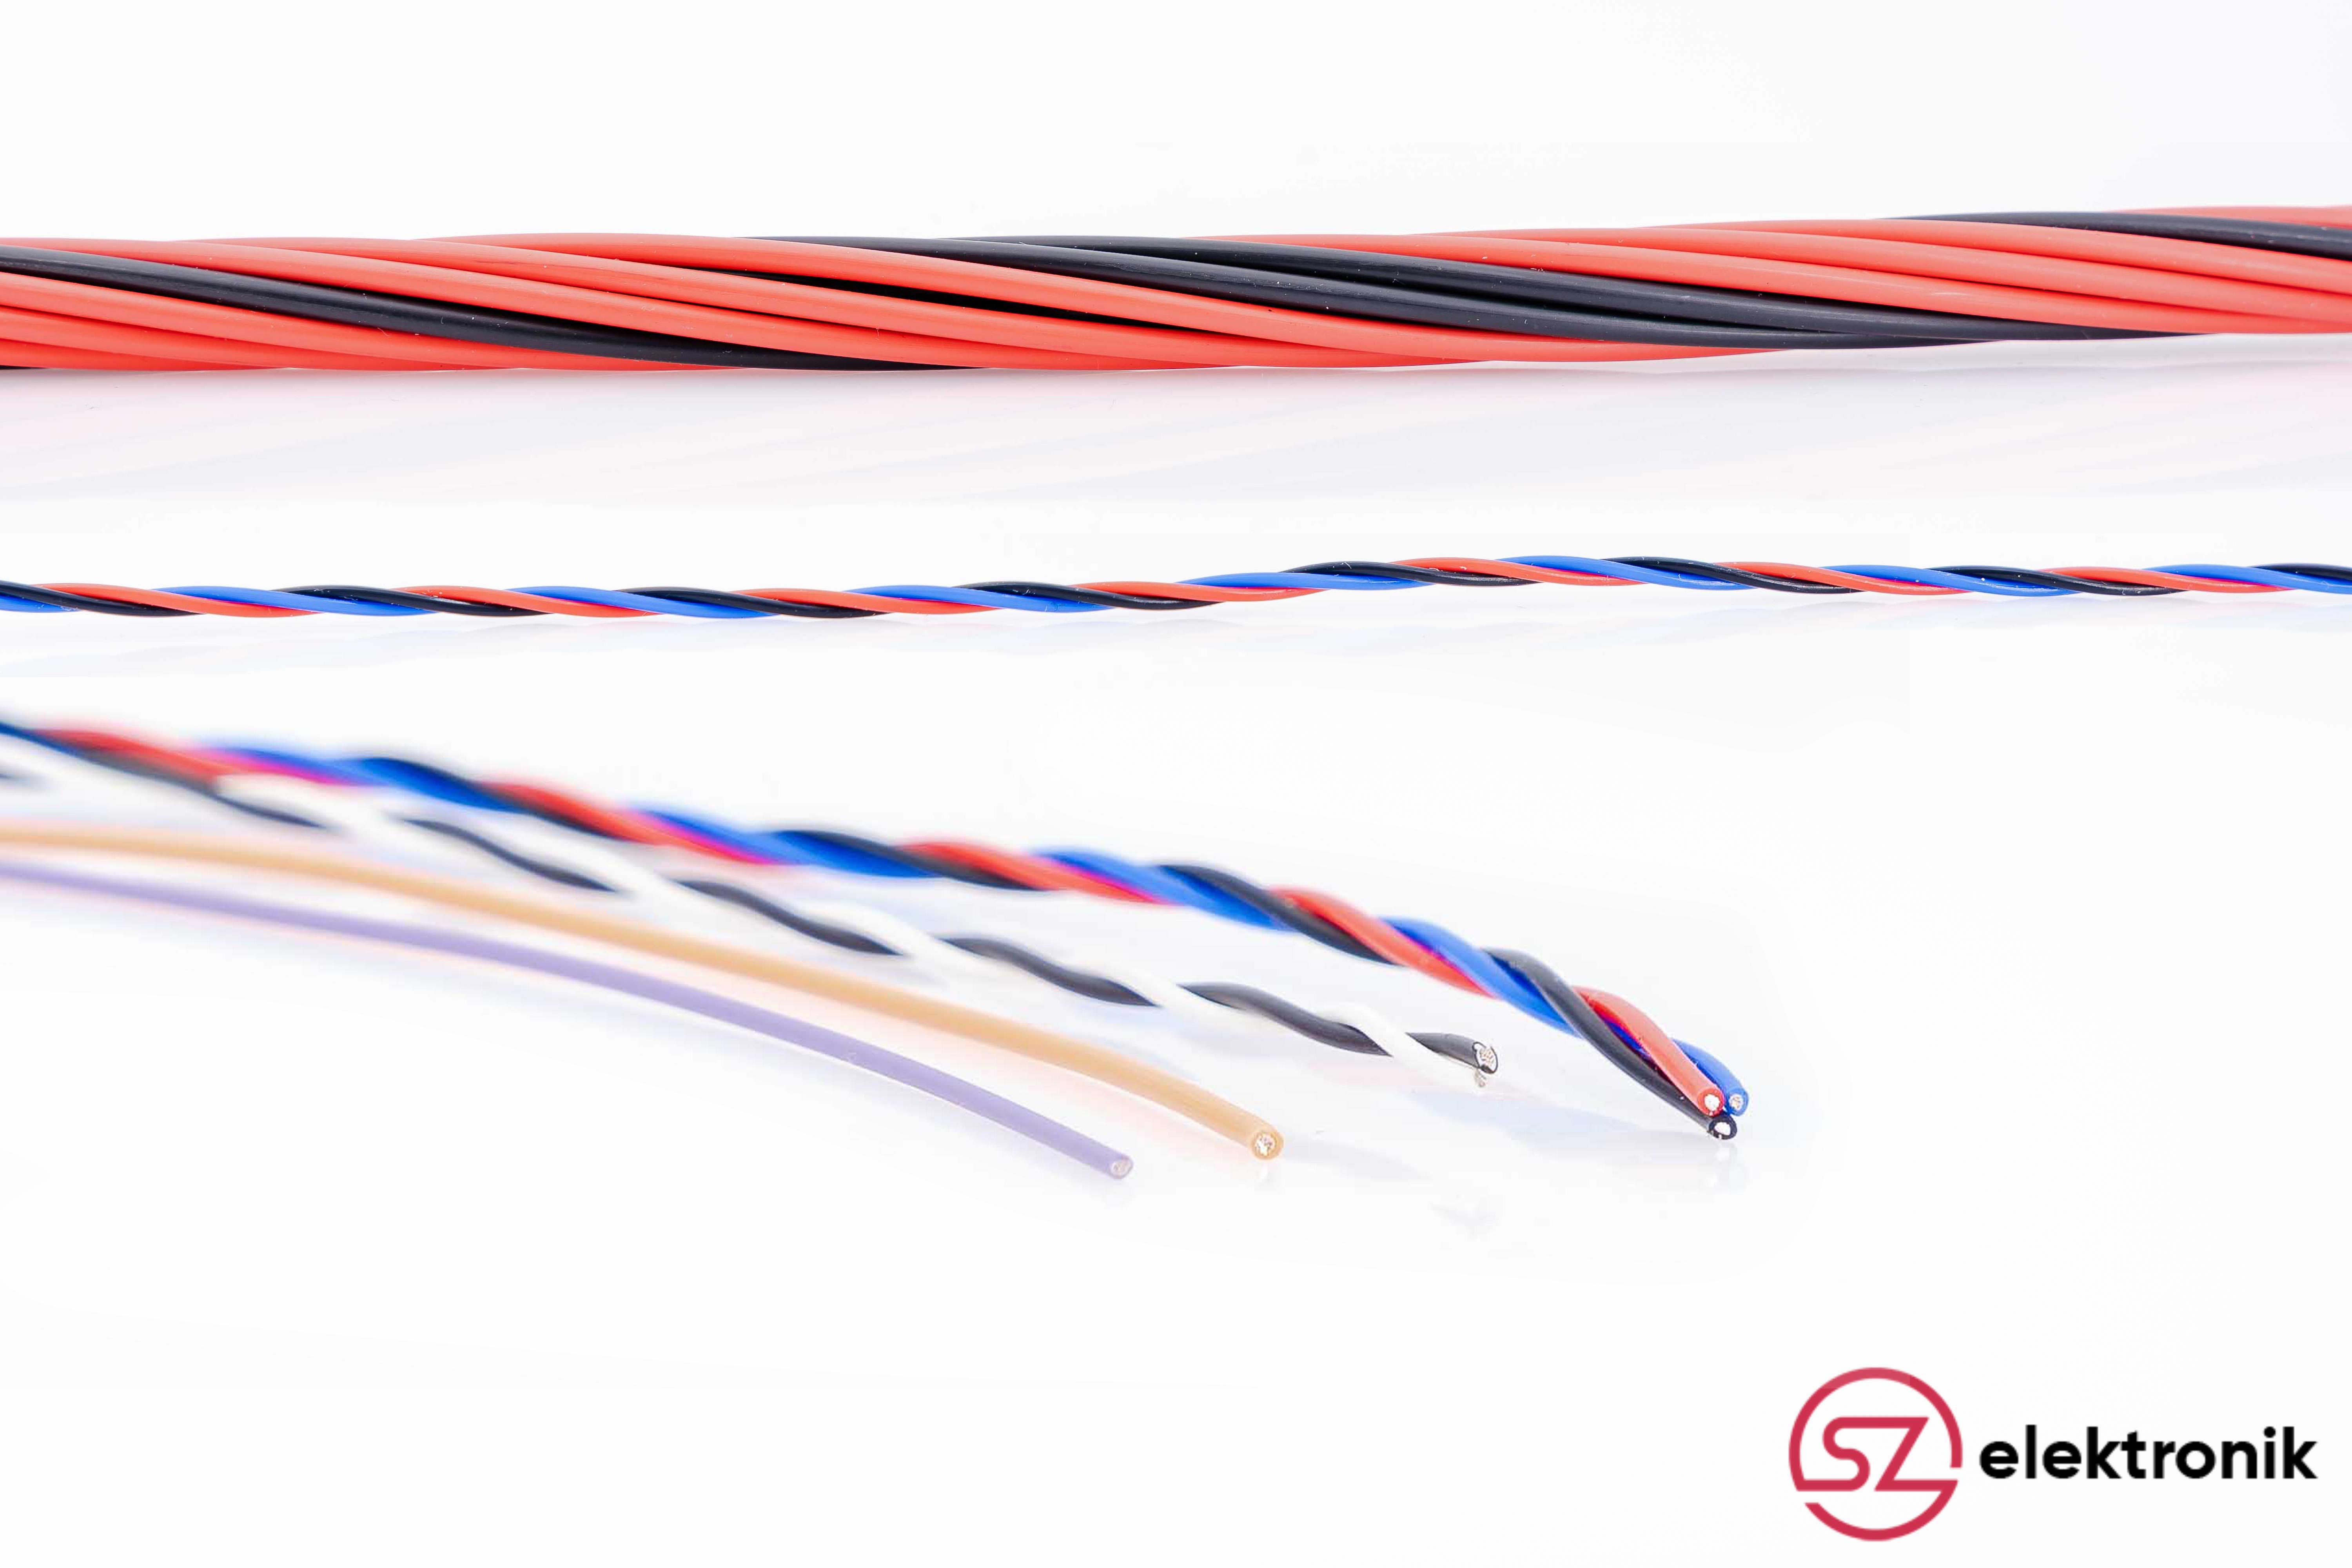 Cable assembly single strands - SZ Elektronik